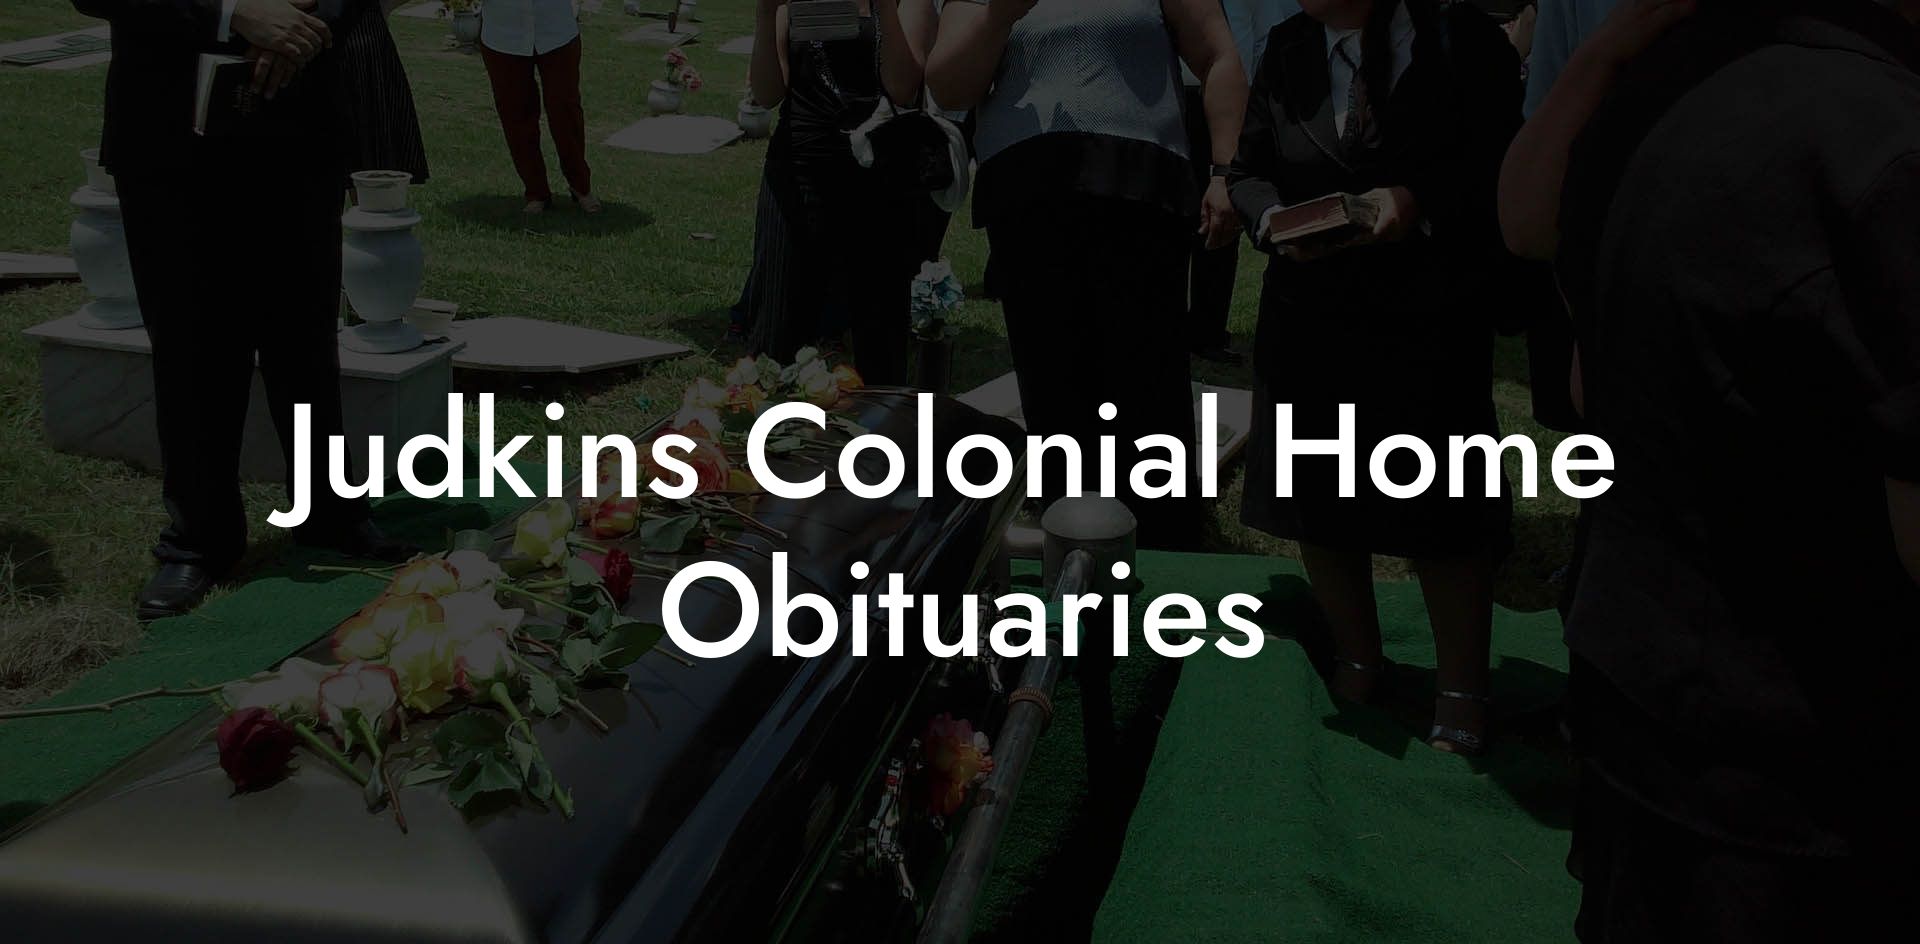 Judkins Colonial Home Obituaries